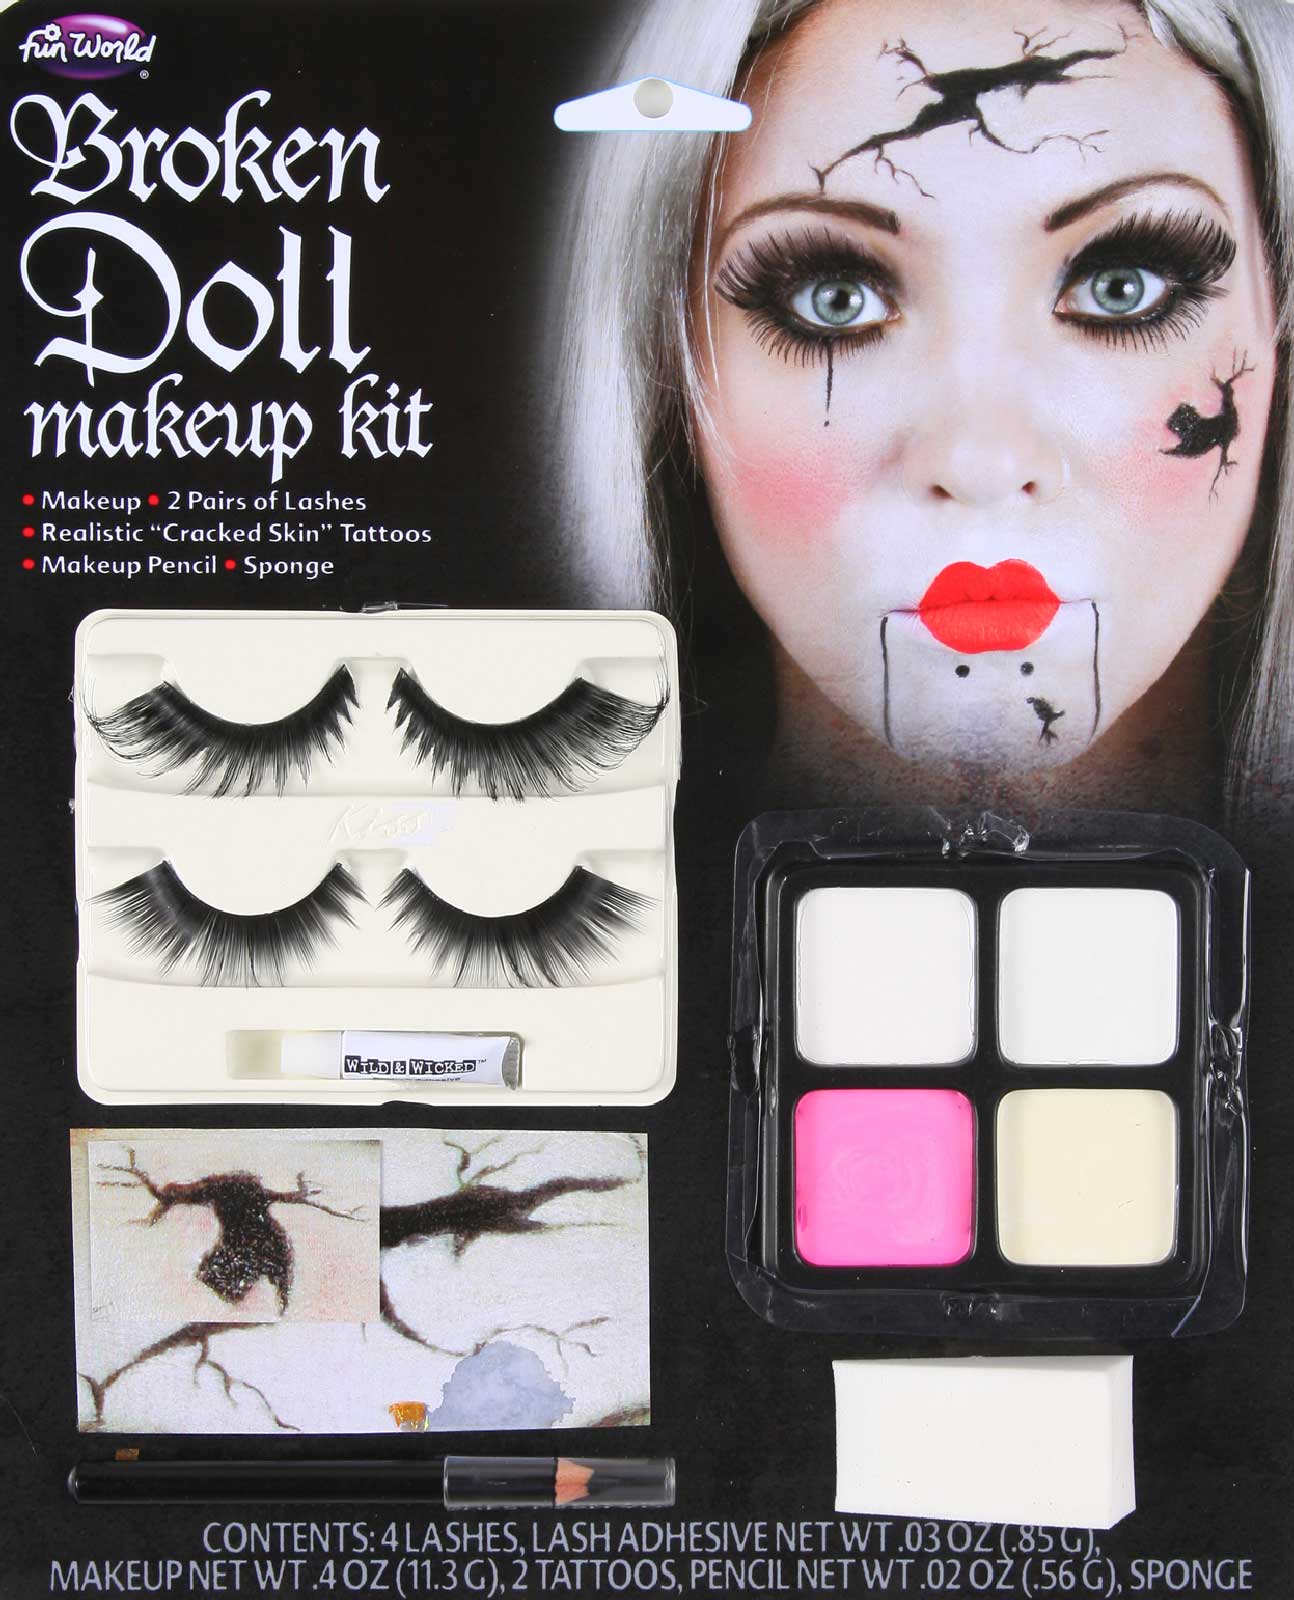 Fun World Women's Broken Doll Makeup Kit